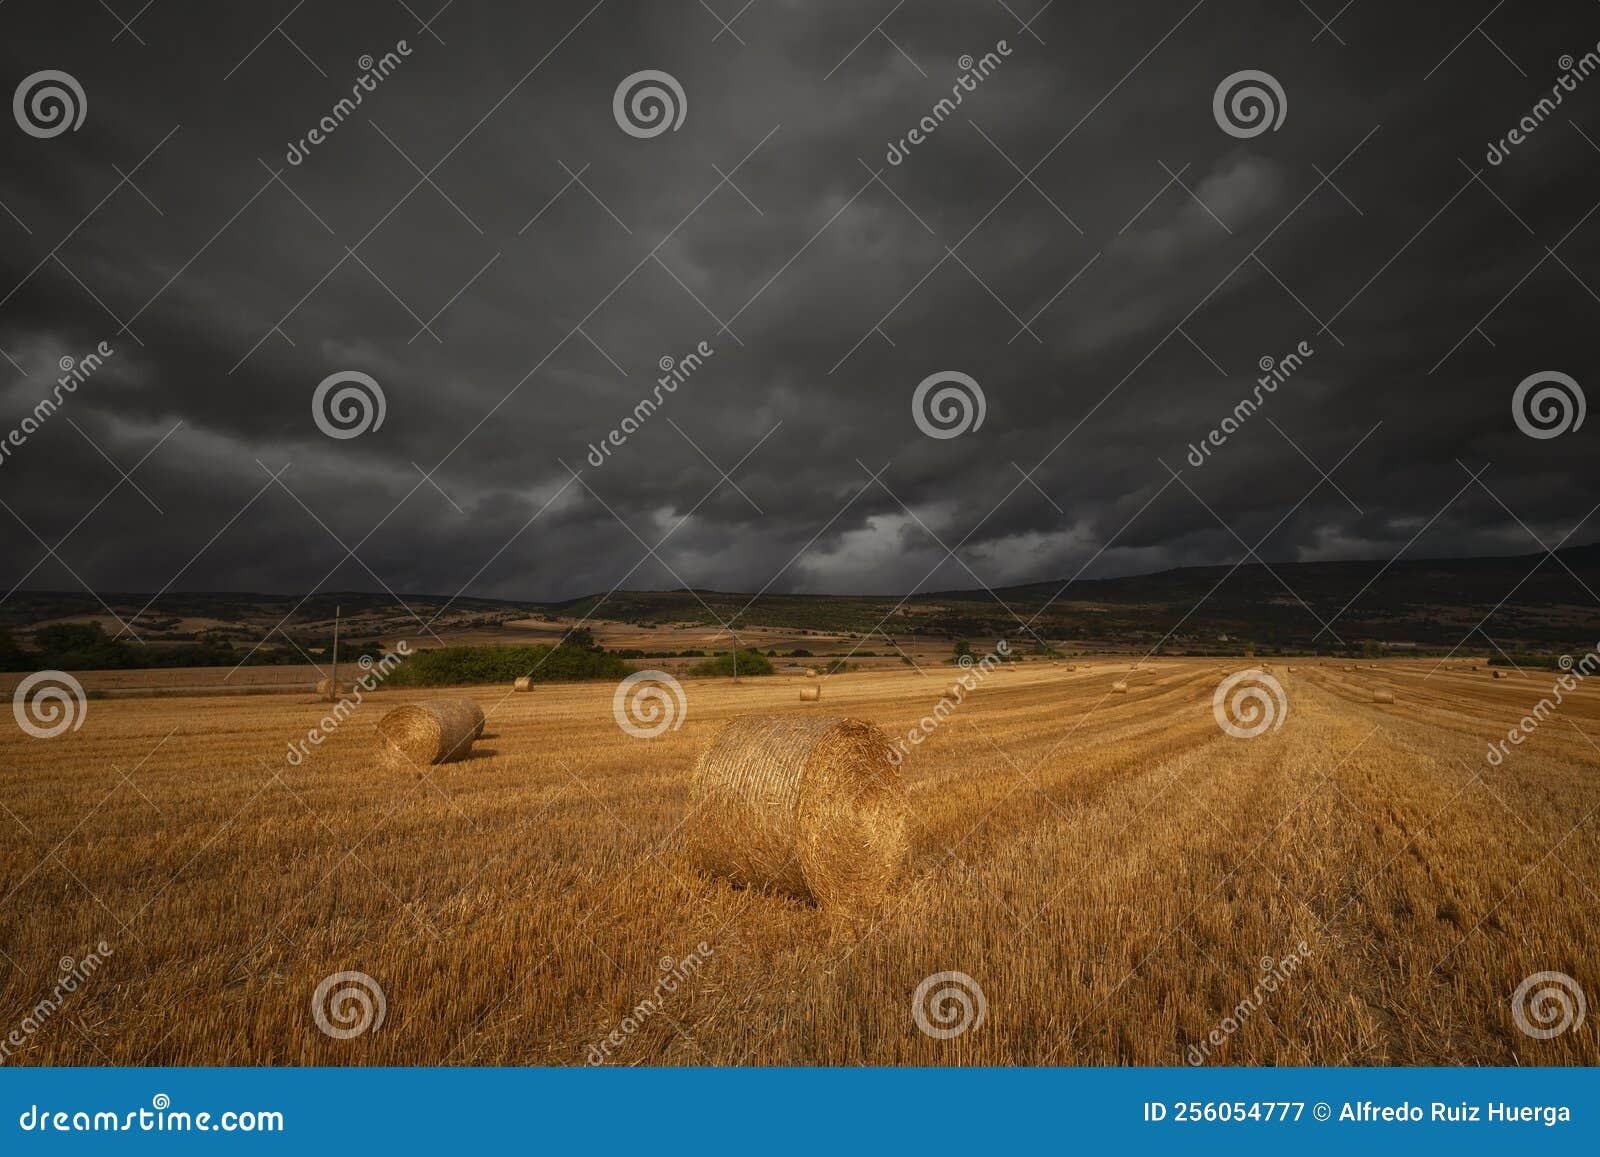 harvest time, summer field in espejo